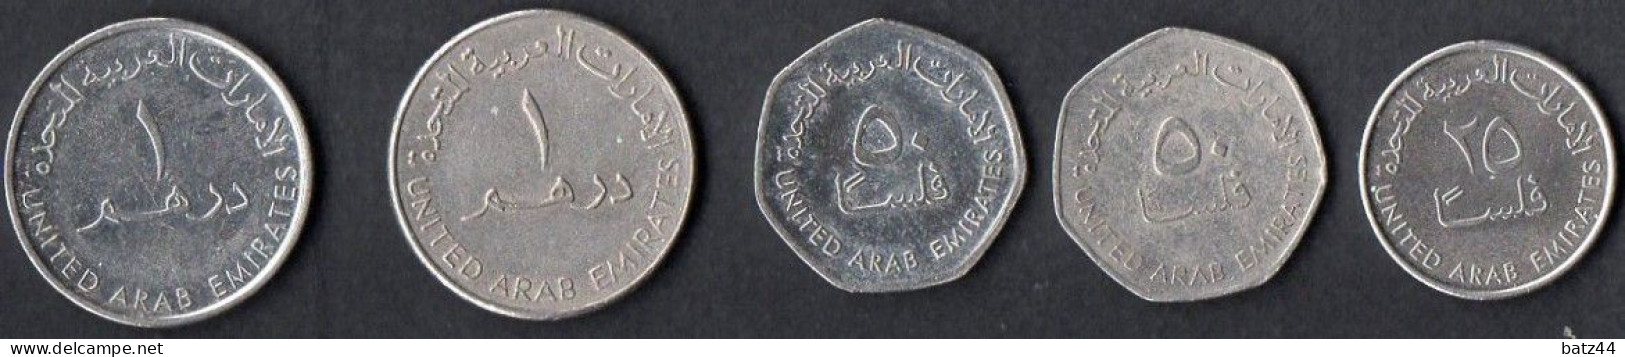 United Arab Emirates Pièces De Monnaie Coins - United Arab Emirates